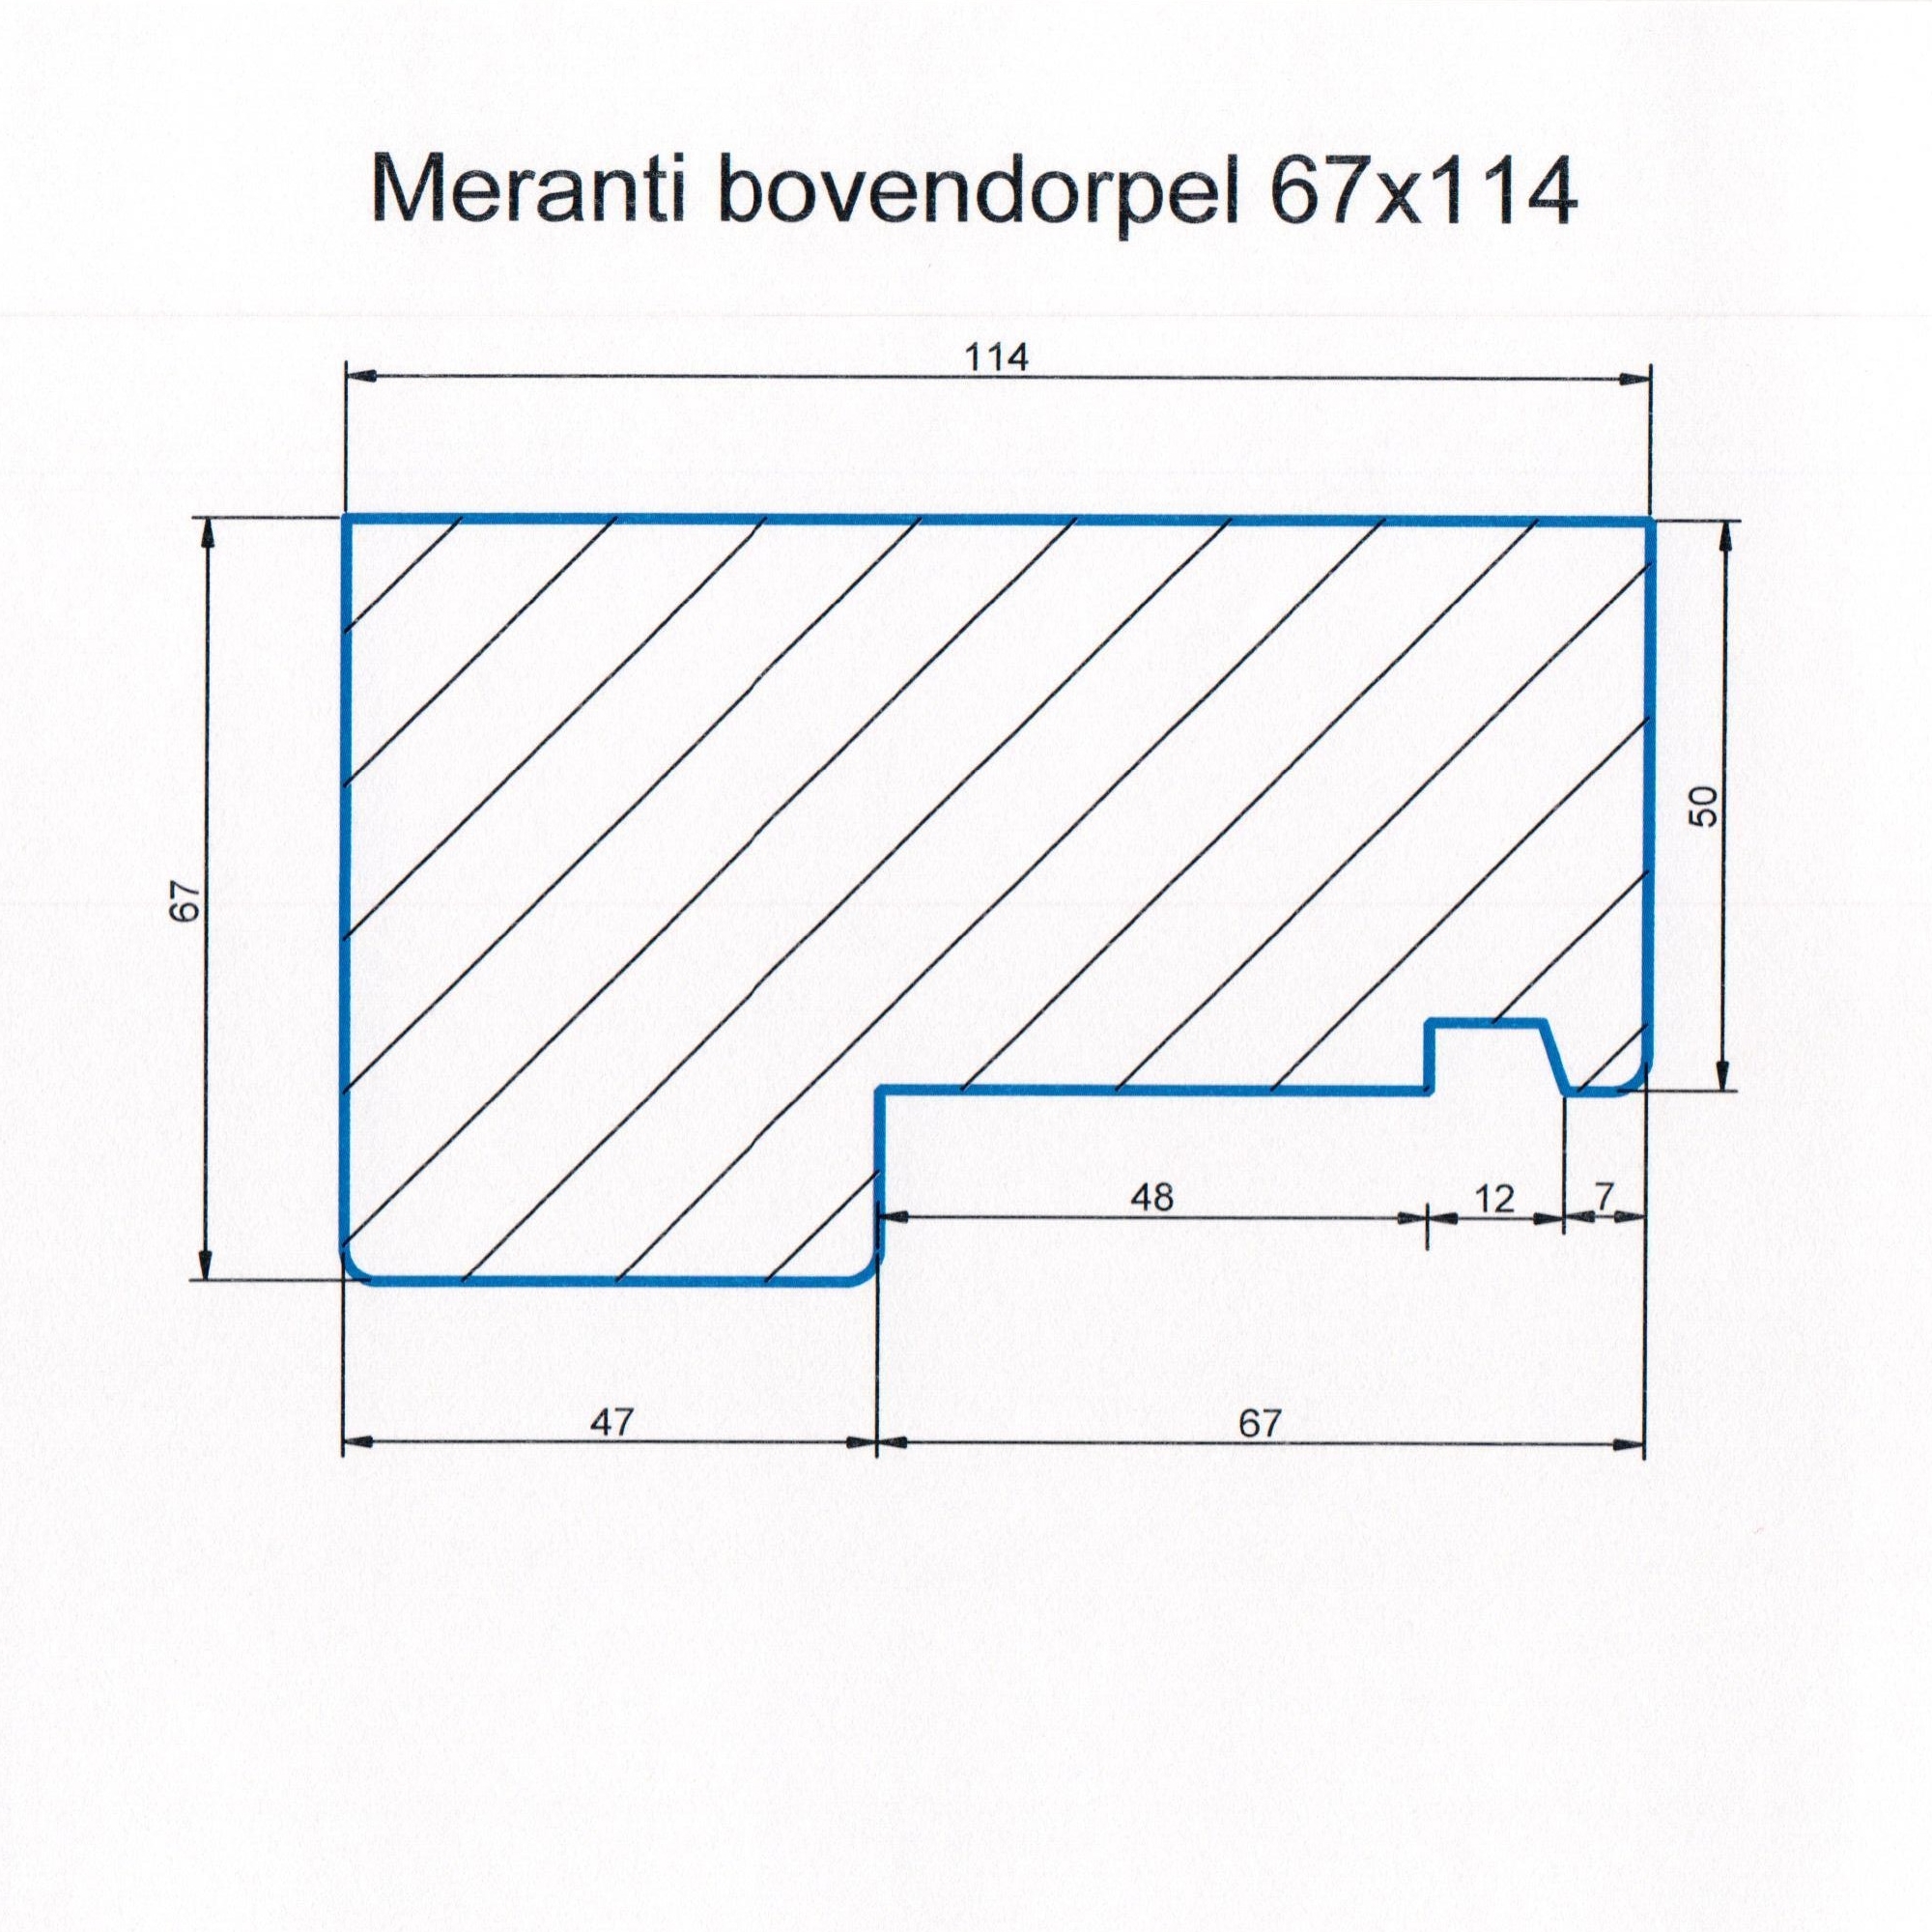 Meranti 67x114 kozijnhout bovendorpel L=1500 mm